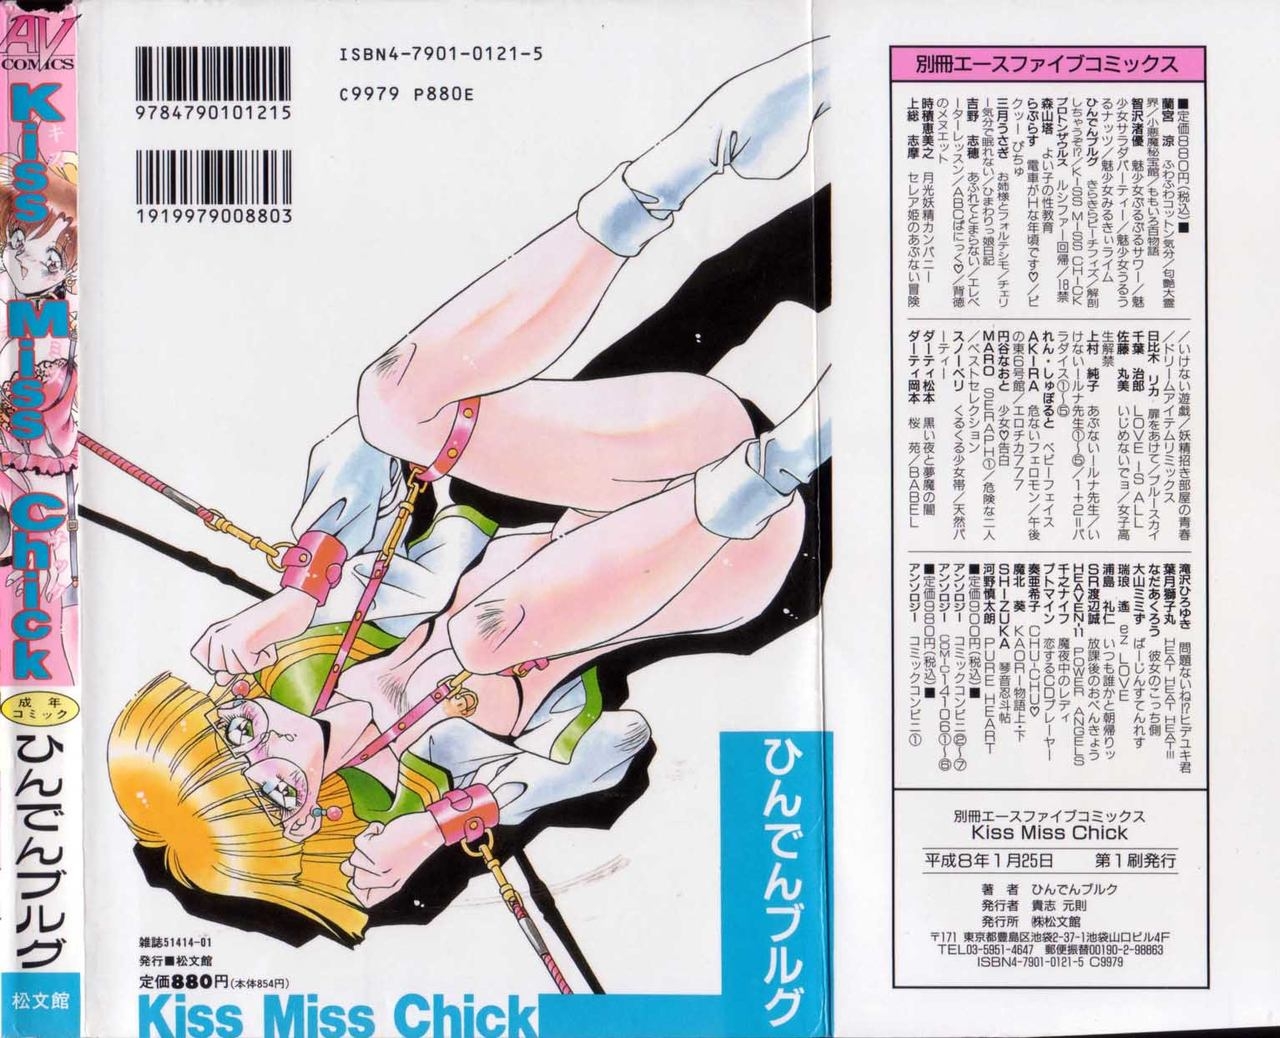 [Hindenburg] Kiss Miss Chick 156